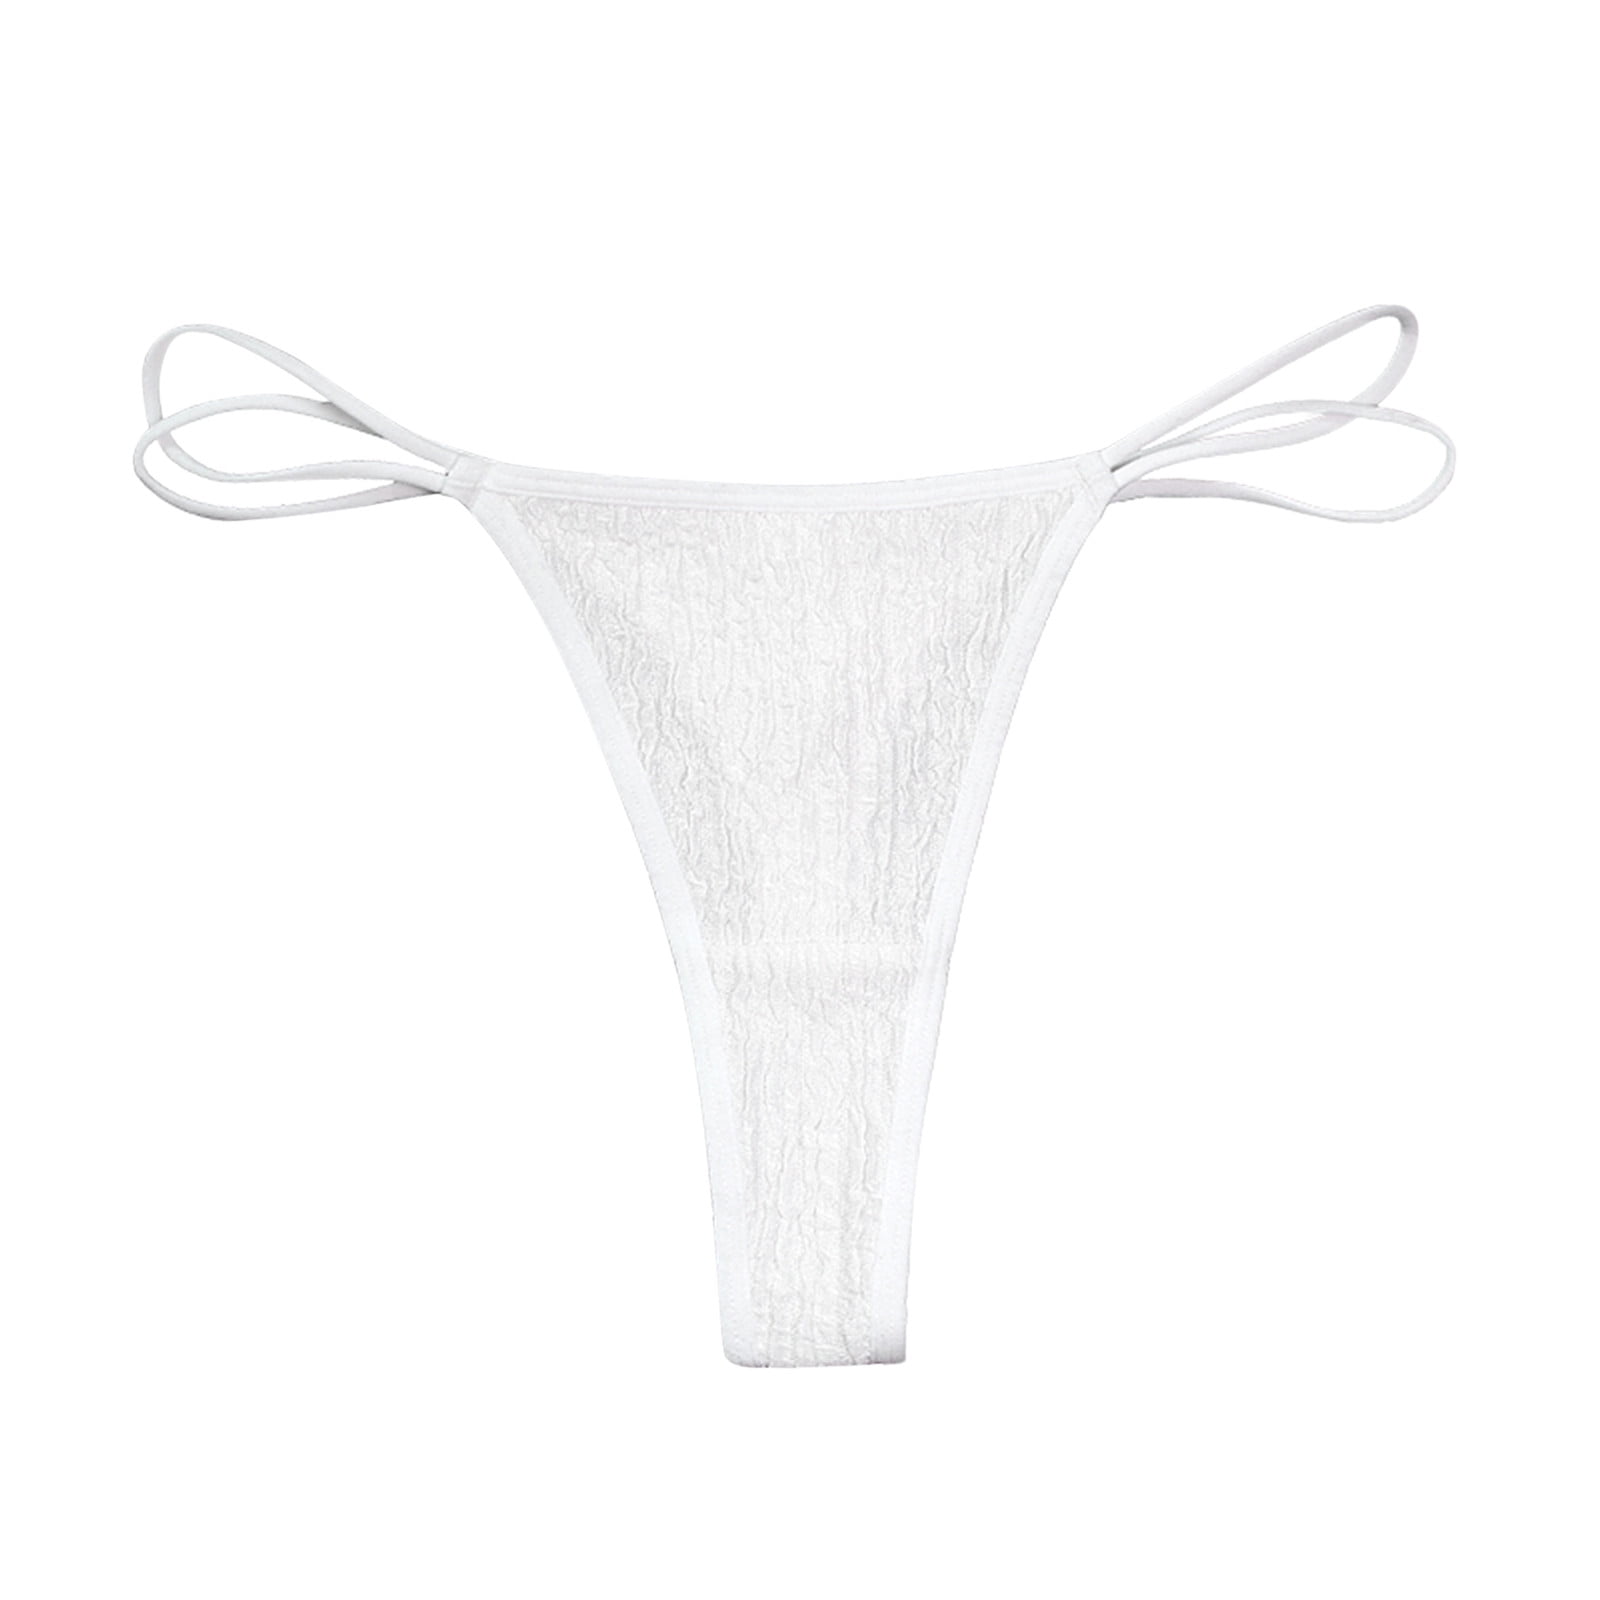 JDEFEG Underwear Women Poop Boxers Plus Size Lingerie Set for